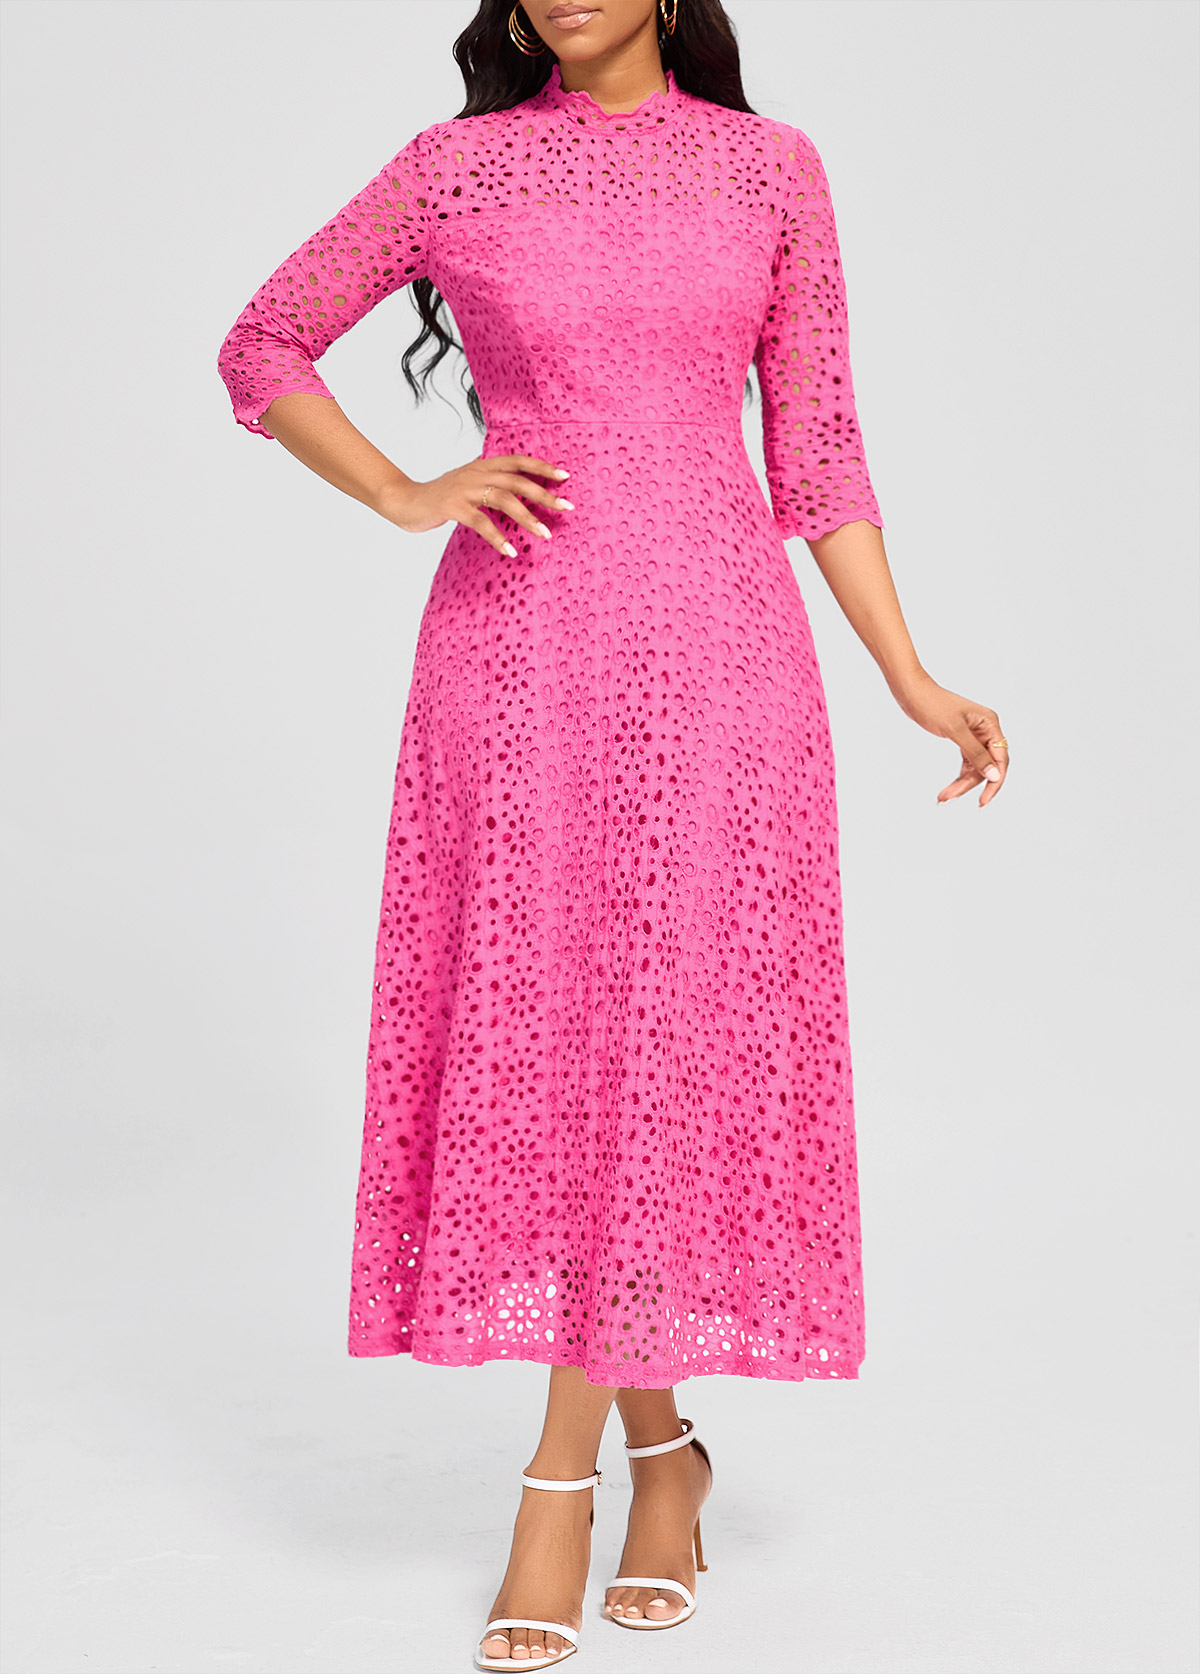 Hot Pink Embroidery Three Quarter Length Sleeve Dress